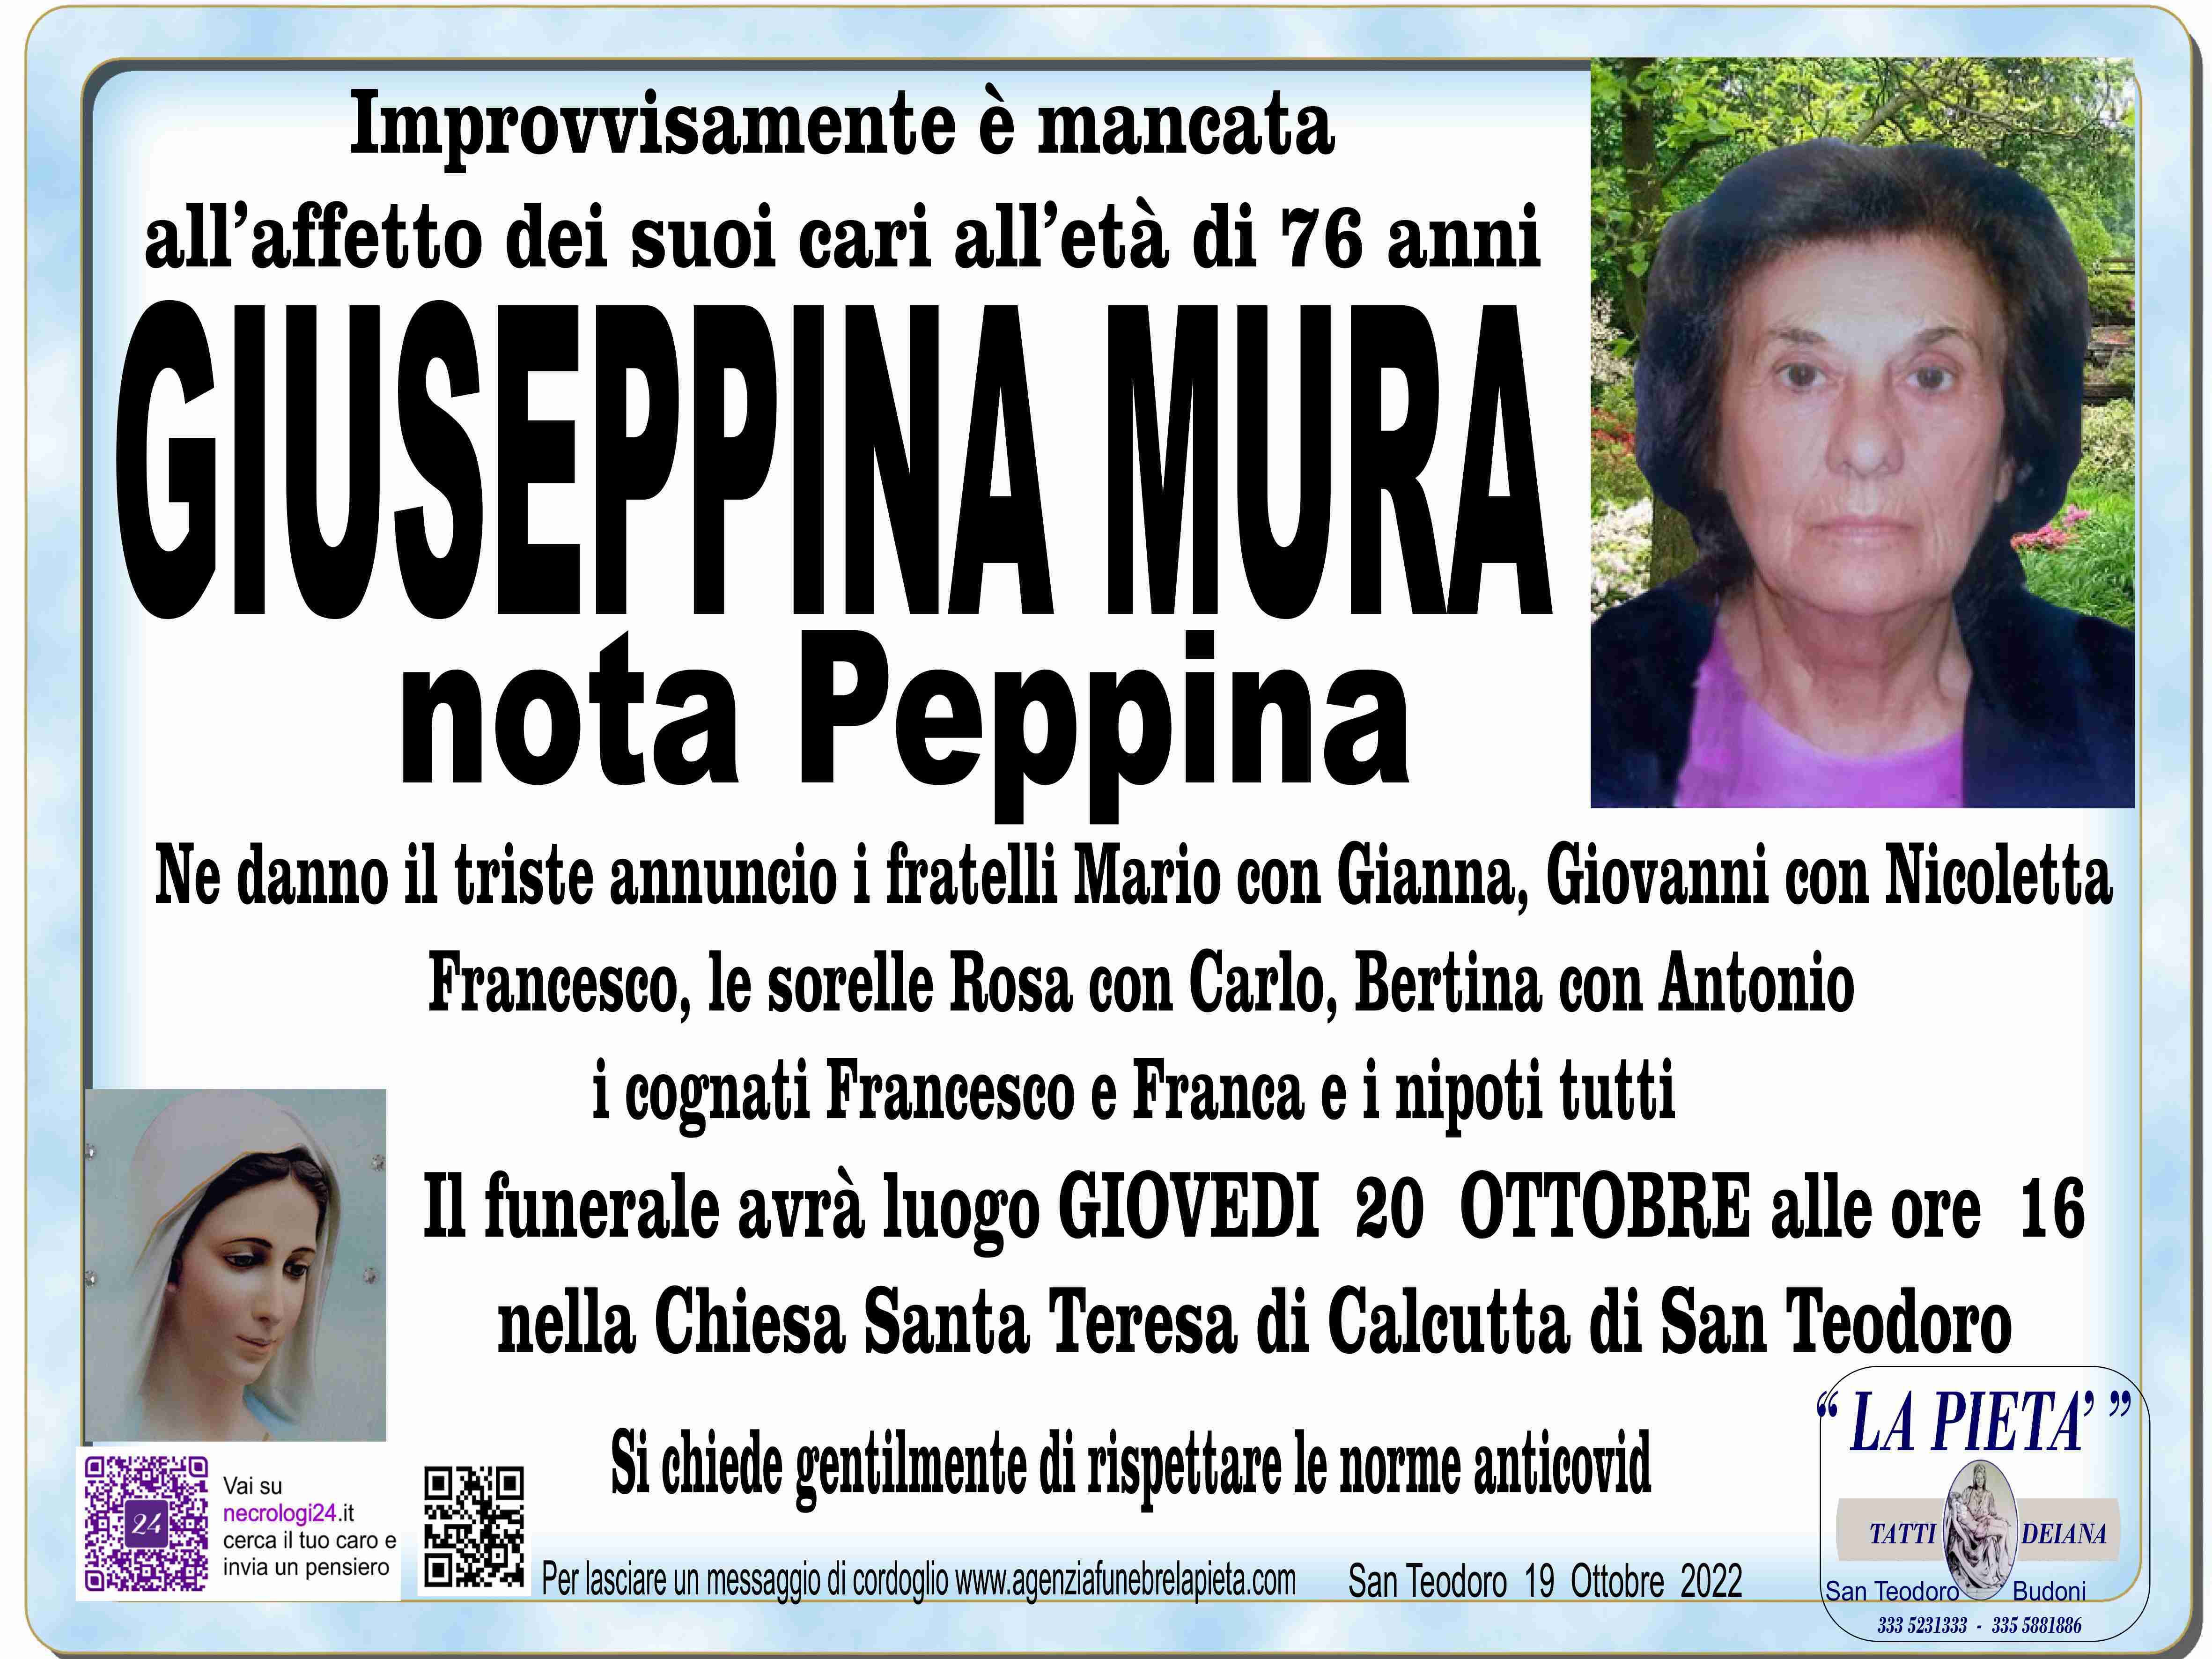 Giuseppina Mura